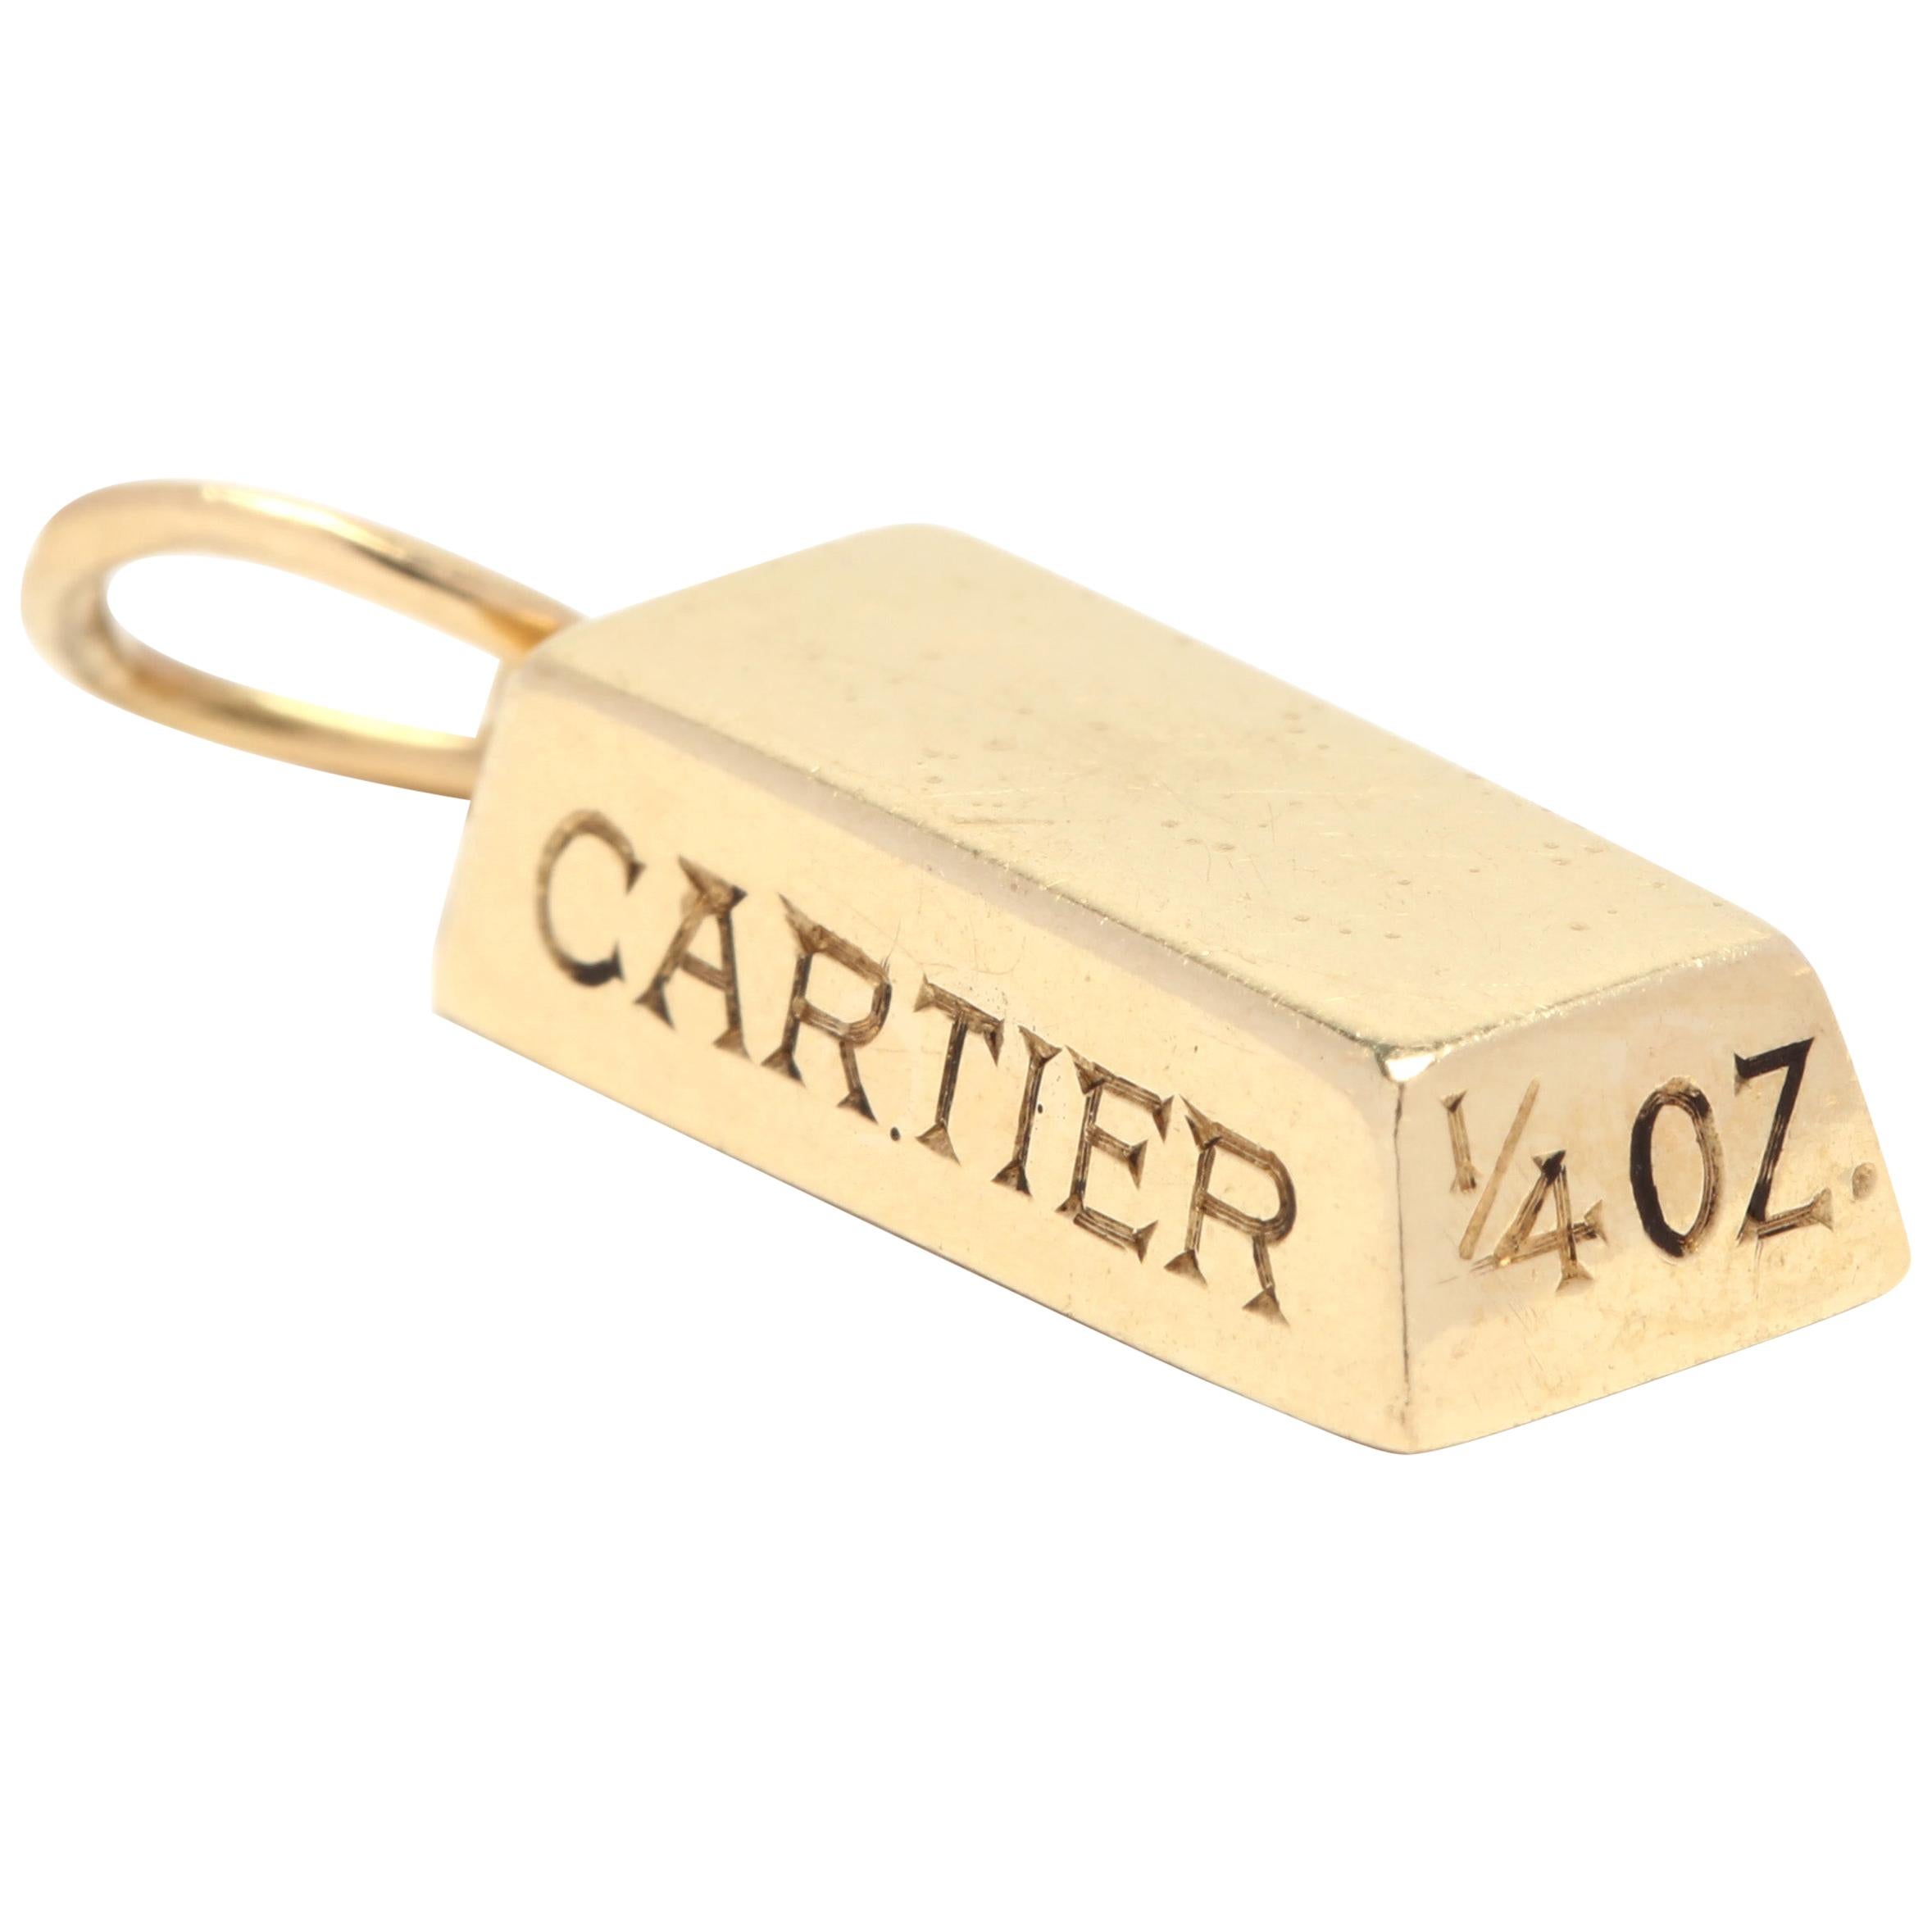 Vintage Cartier 18 Karat Gold 1/4 Oz Ingot Charm